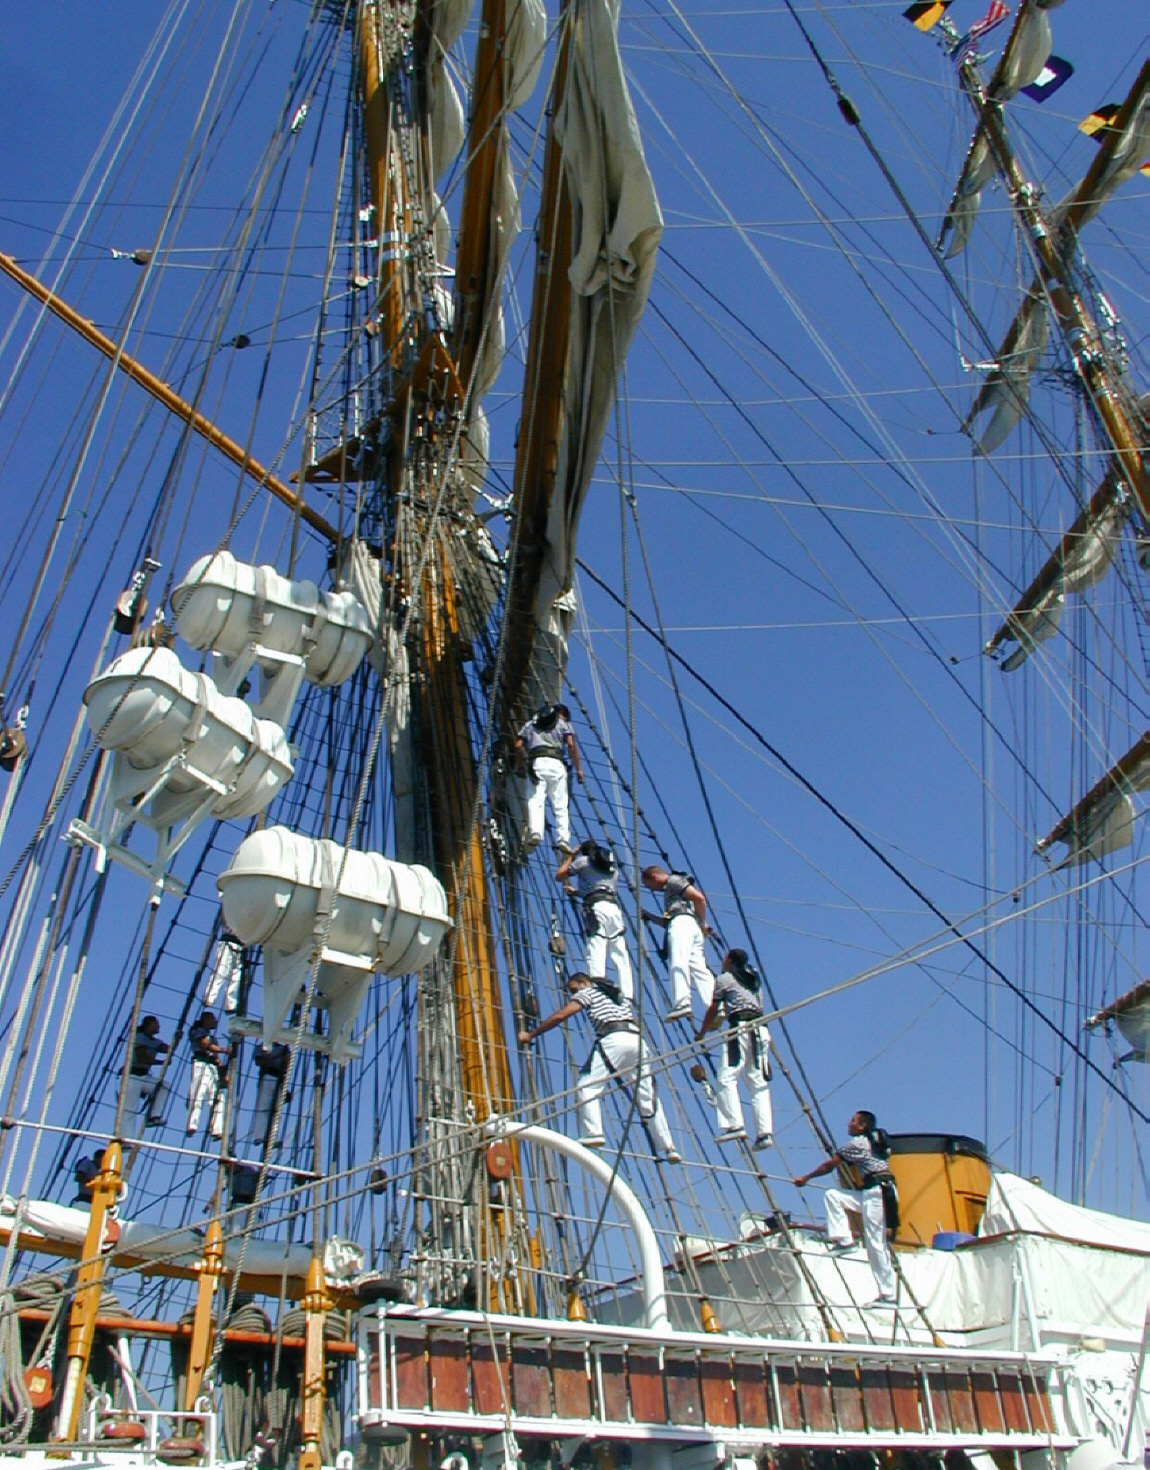 sailors on the ratlines making repairs